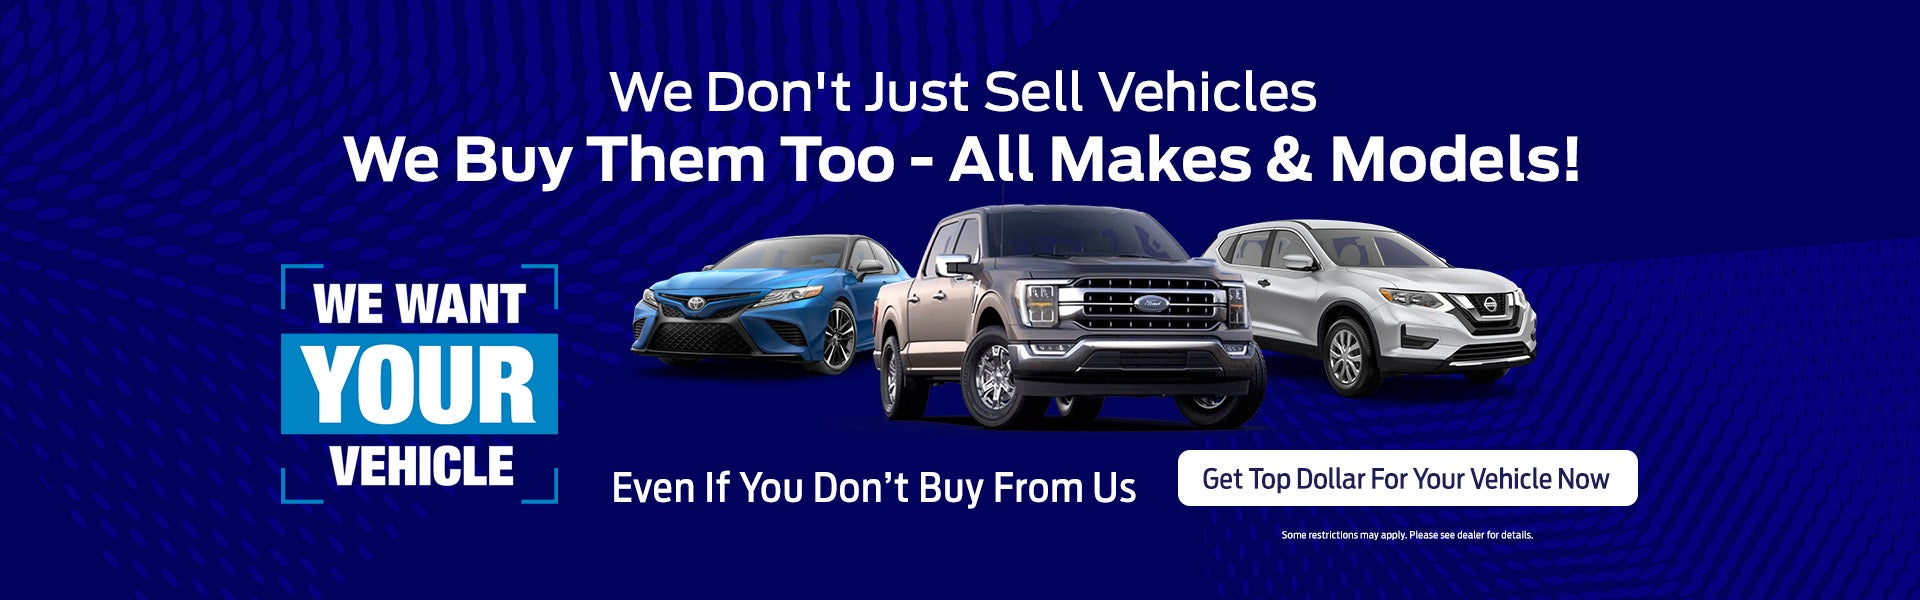 We Buy Vehicles